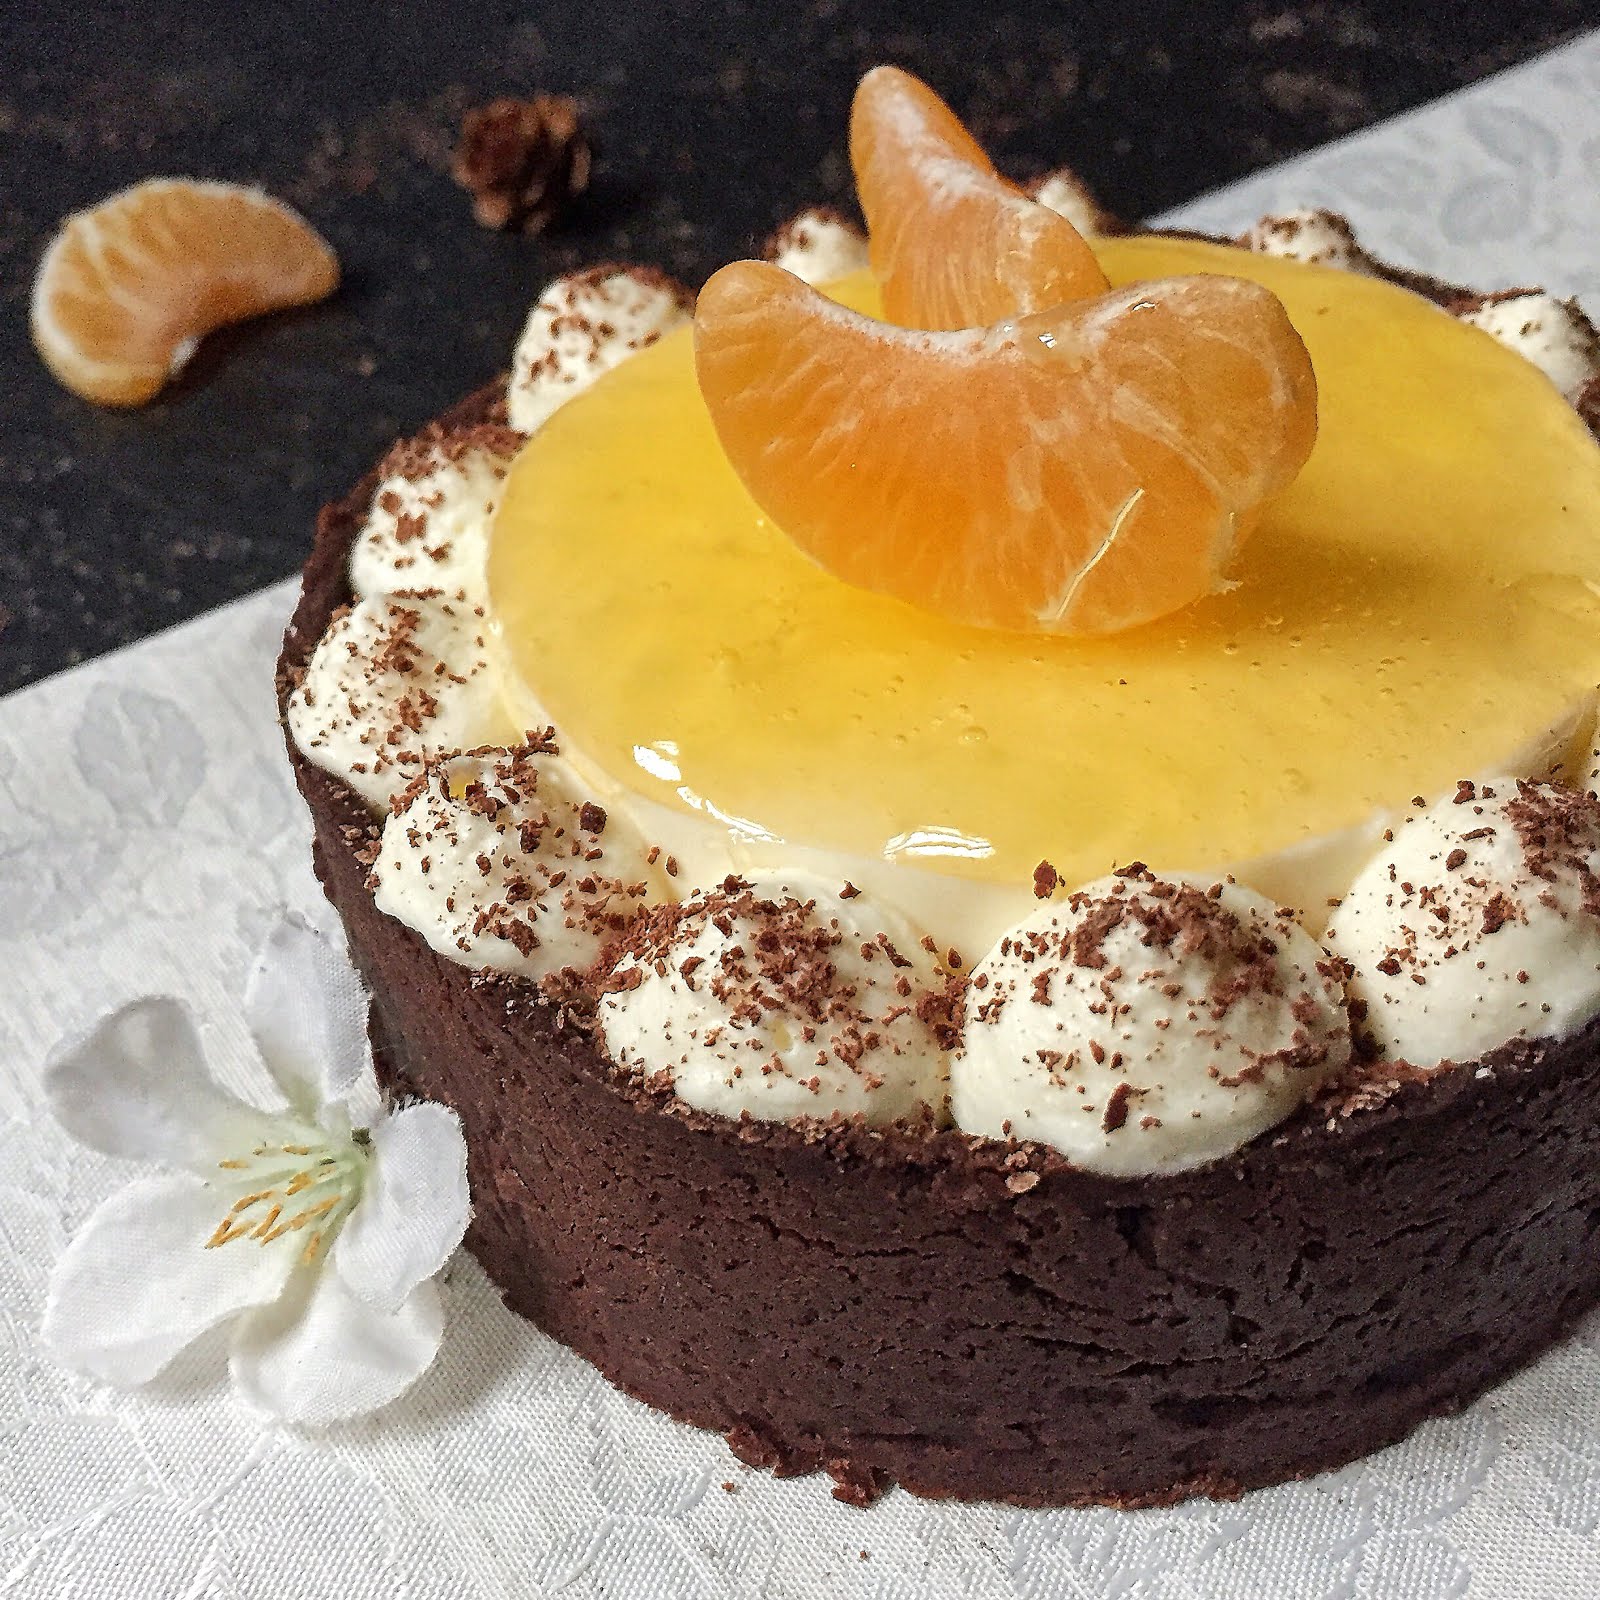 Hidden Sweet Treats: Mandarinen-Schokoladen-Tarte